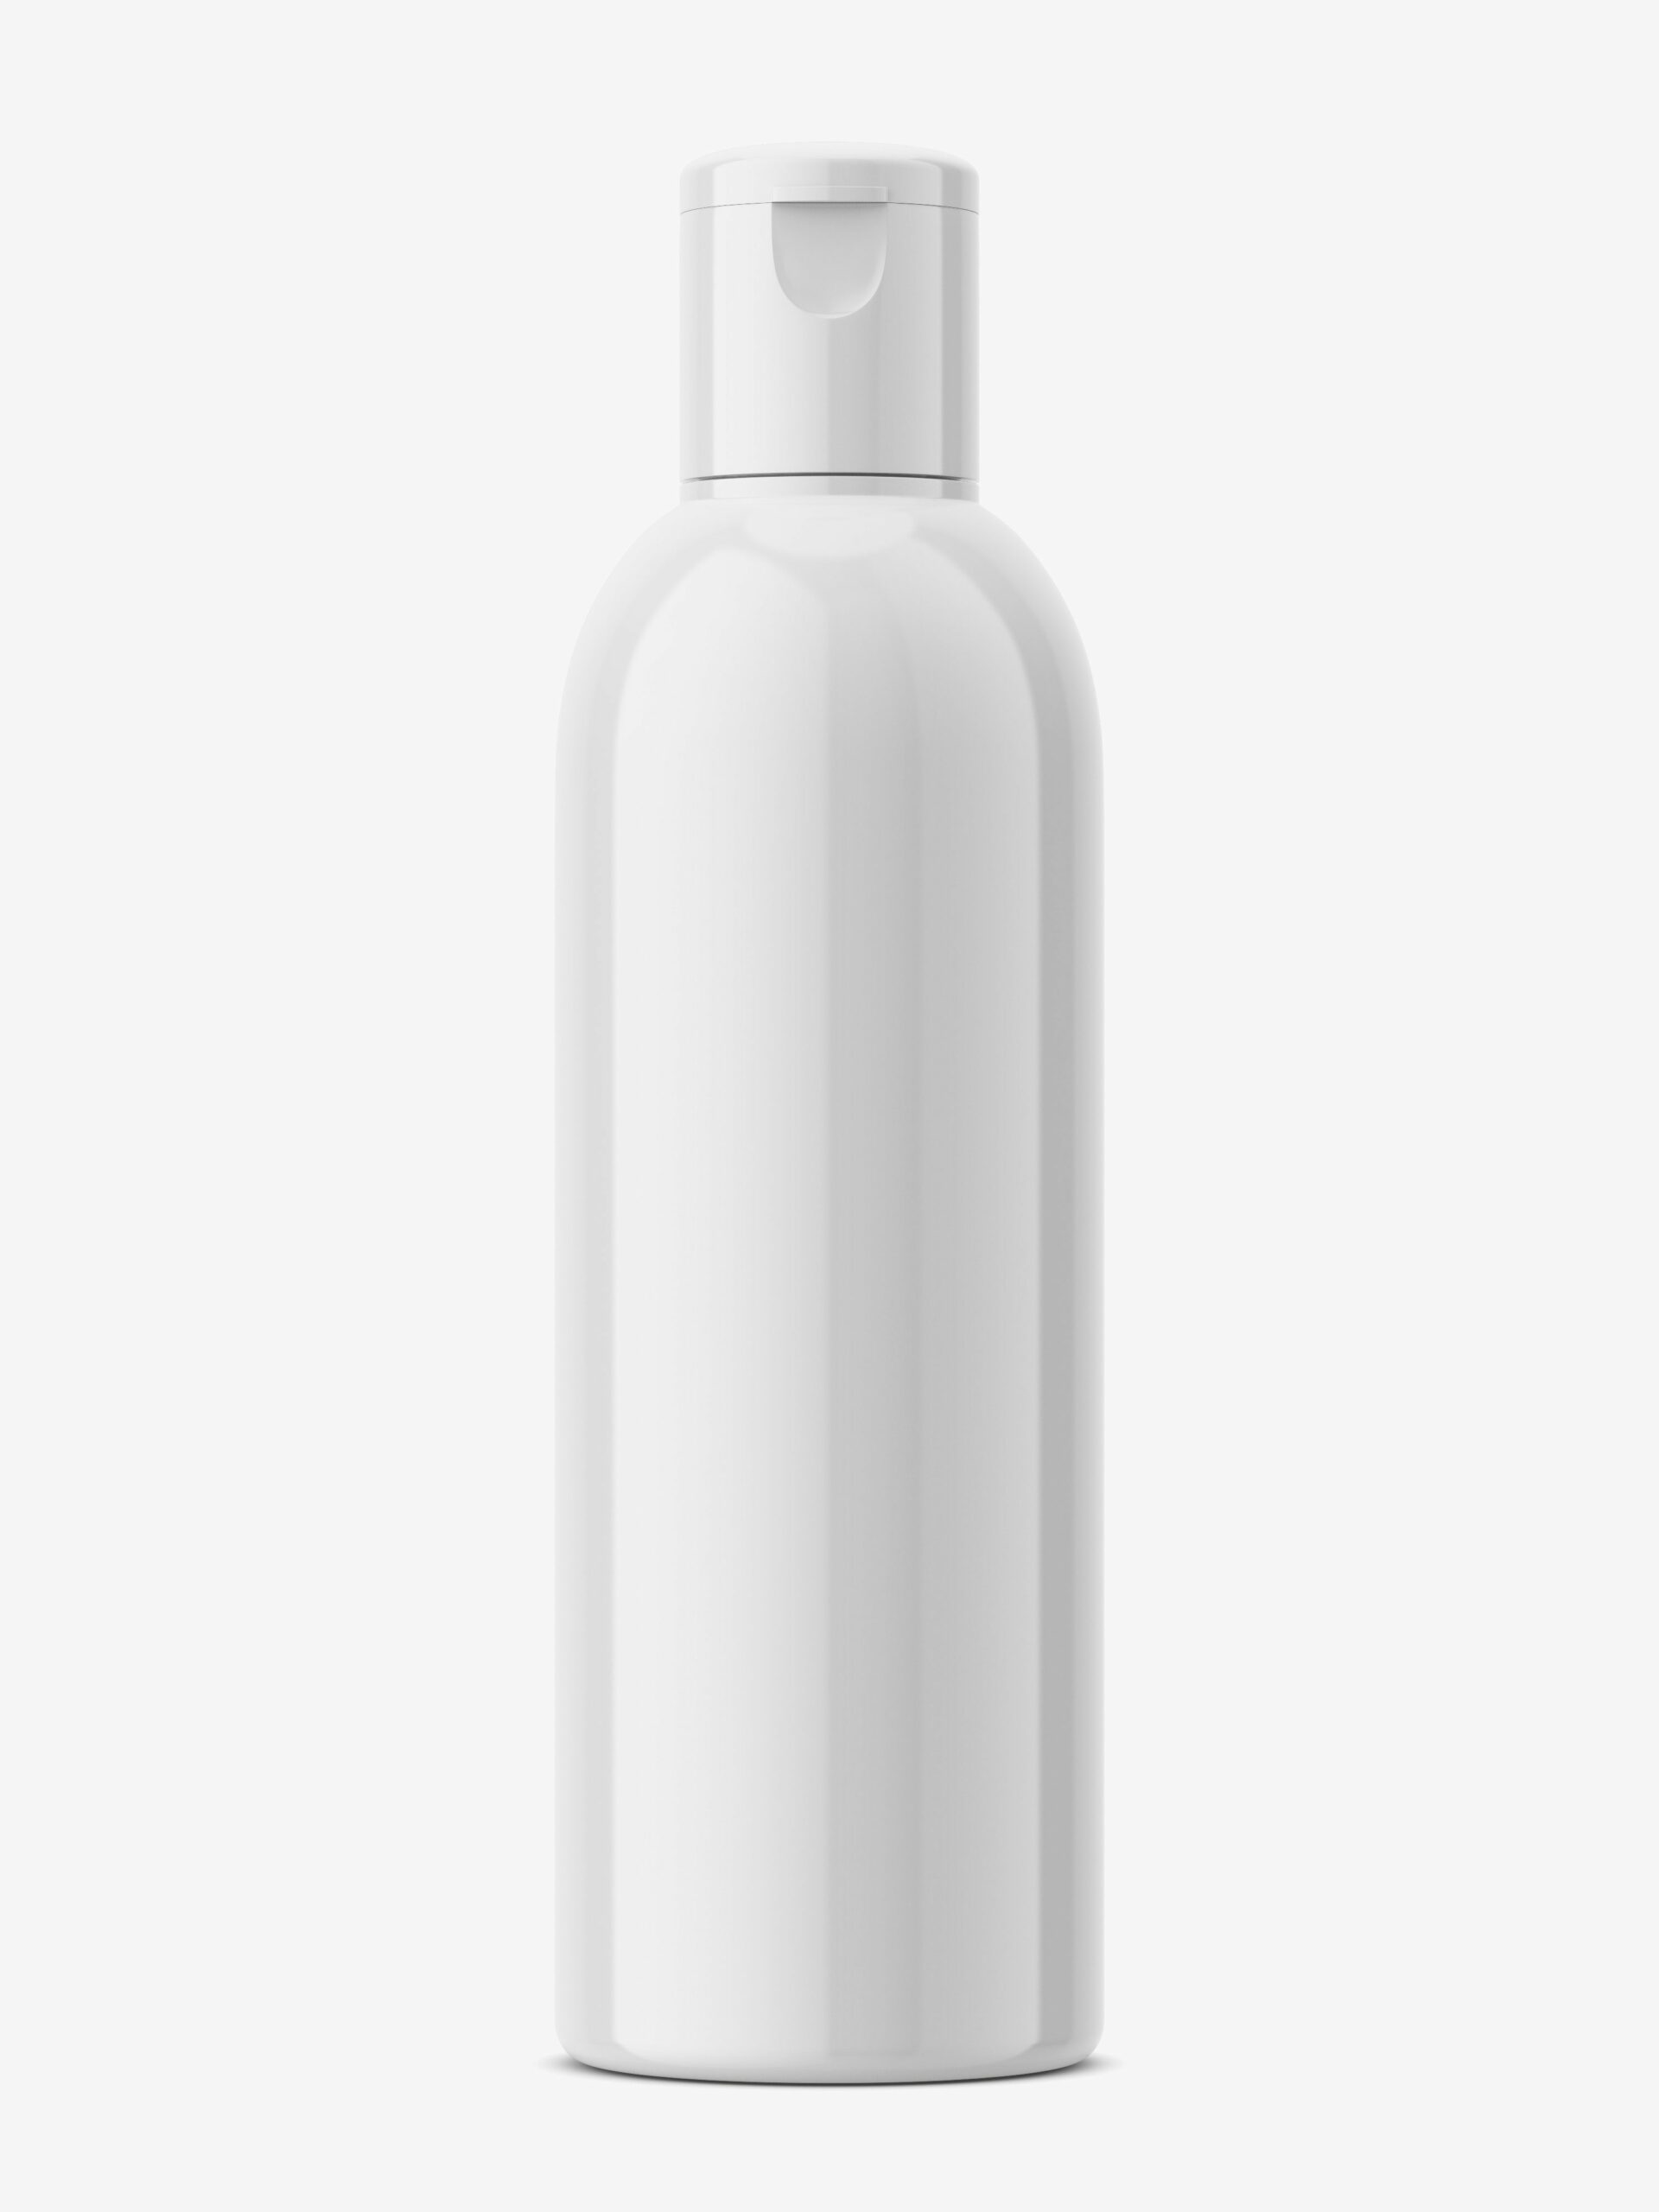 Download Psd Mockups Matte Plastic Dairy Bottle Front View Branding Mockups Yellowimages Mockups